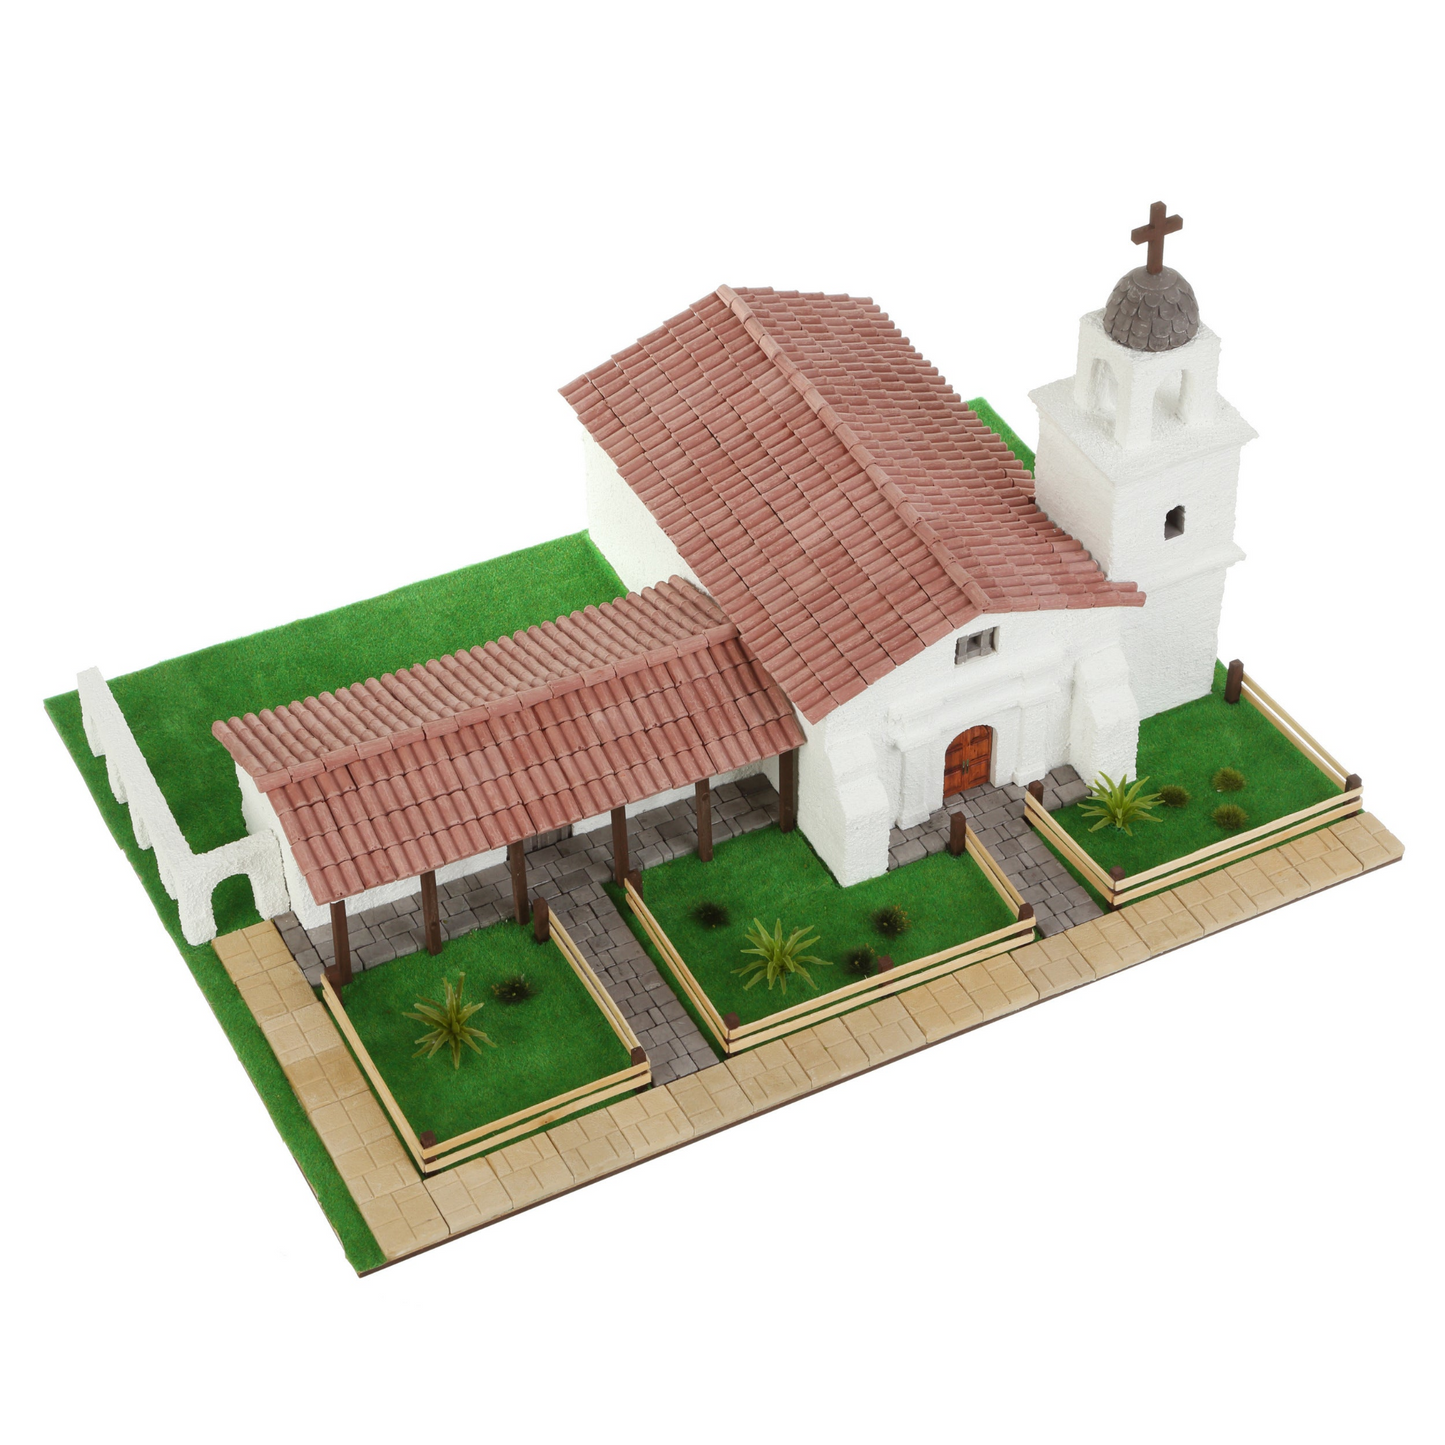 Mini bricks constructor set - Mission Santa Cruz